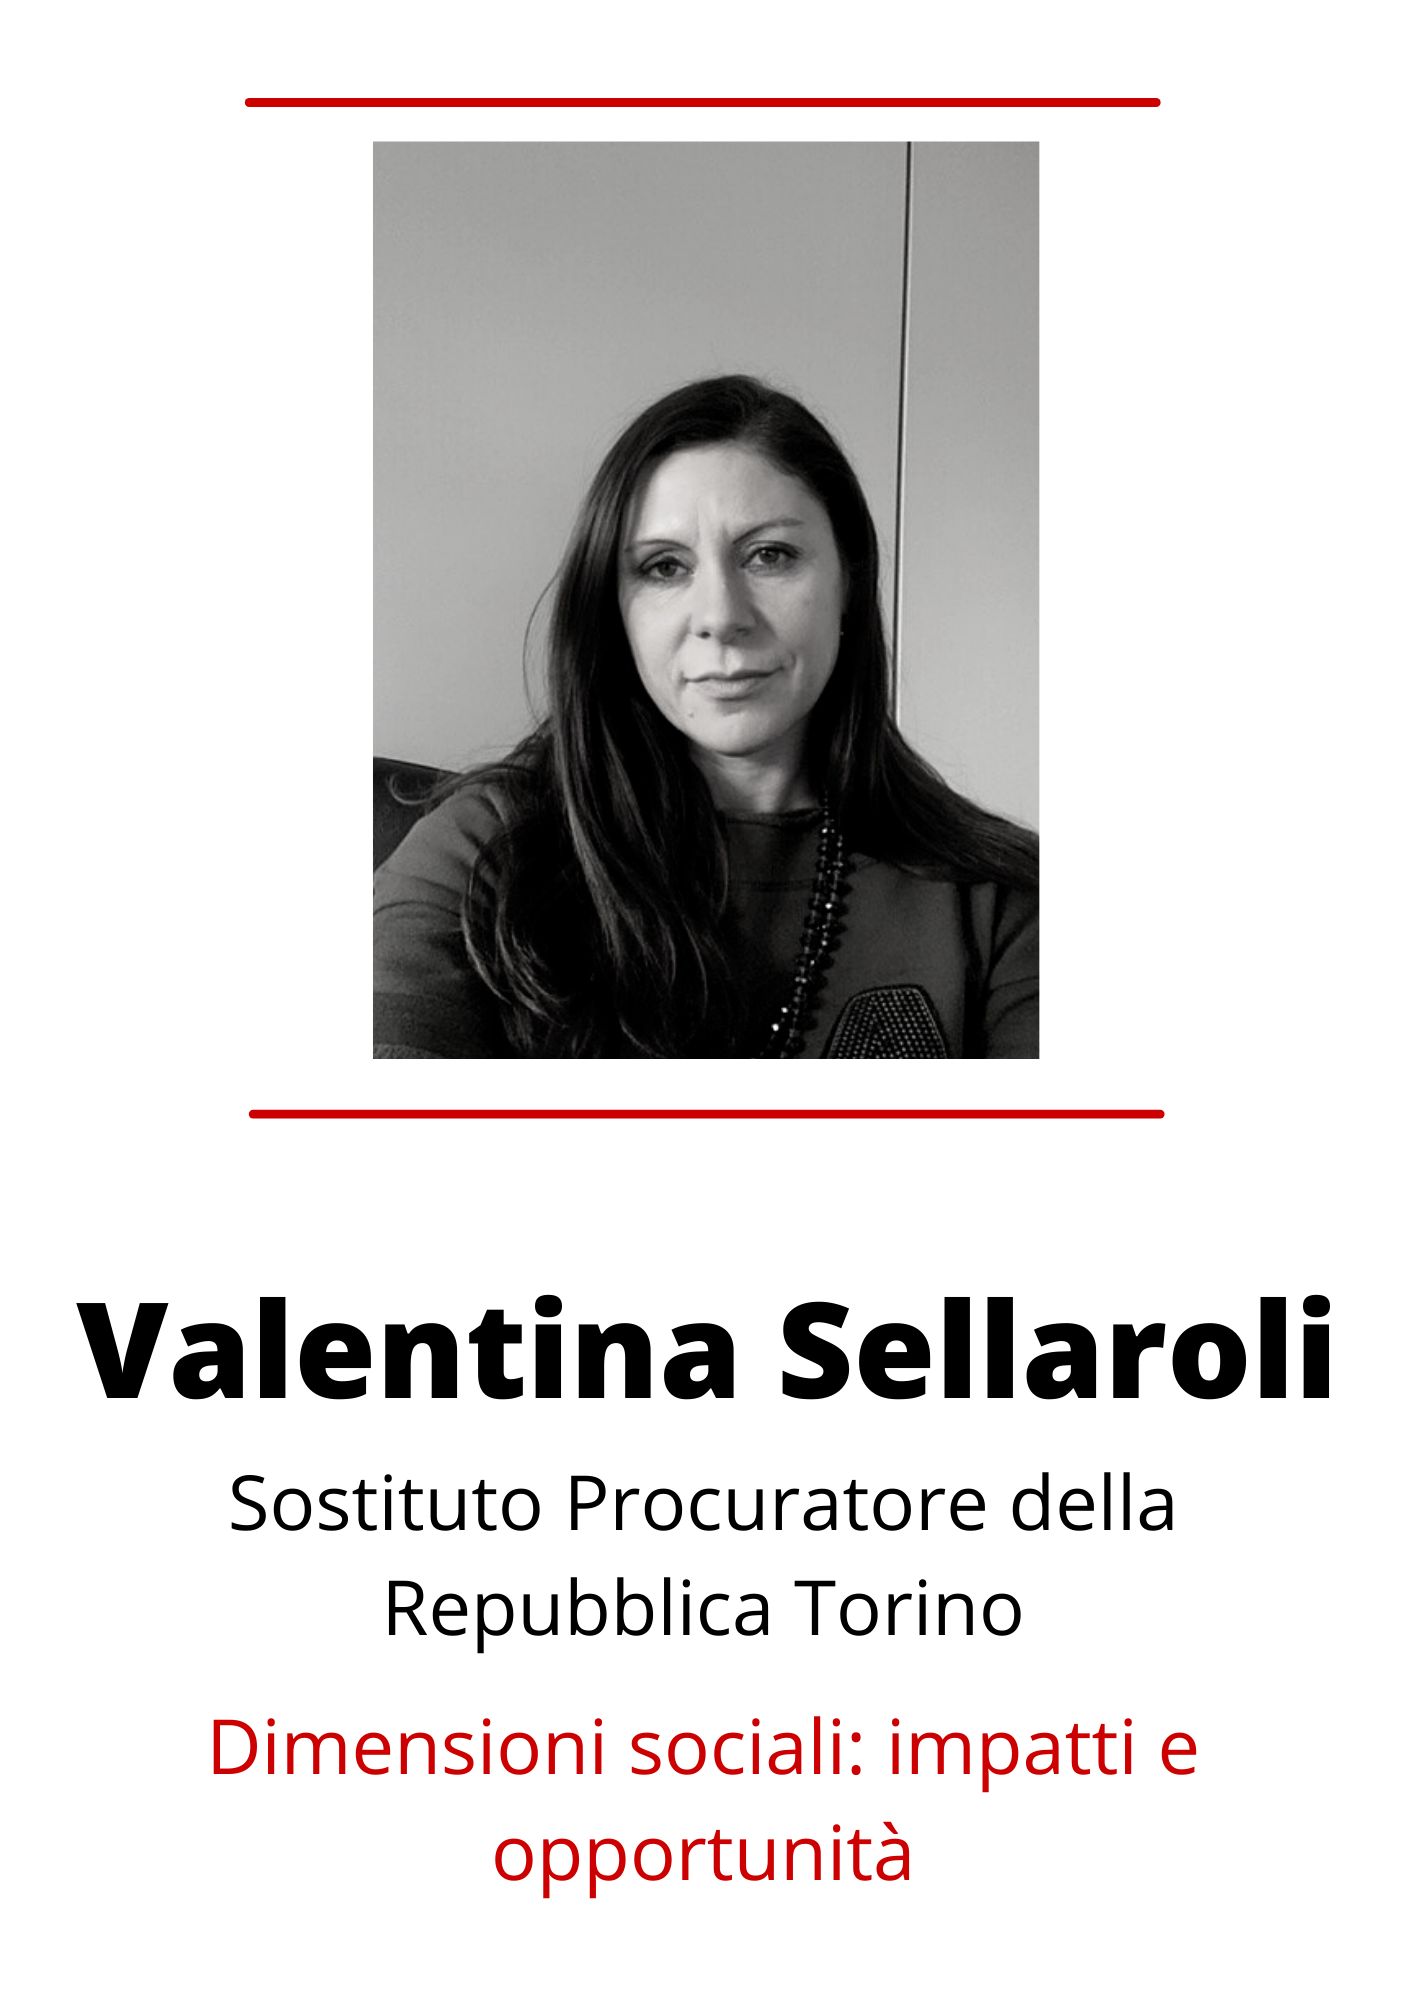 Card Valentina Sellaroli